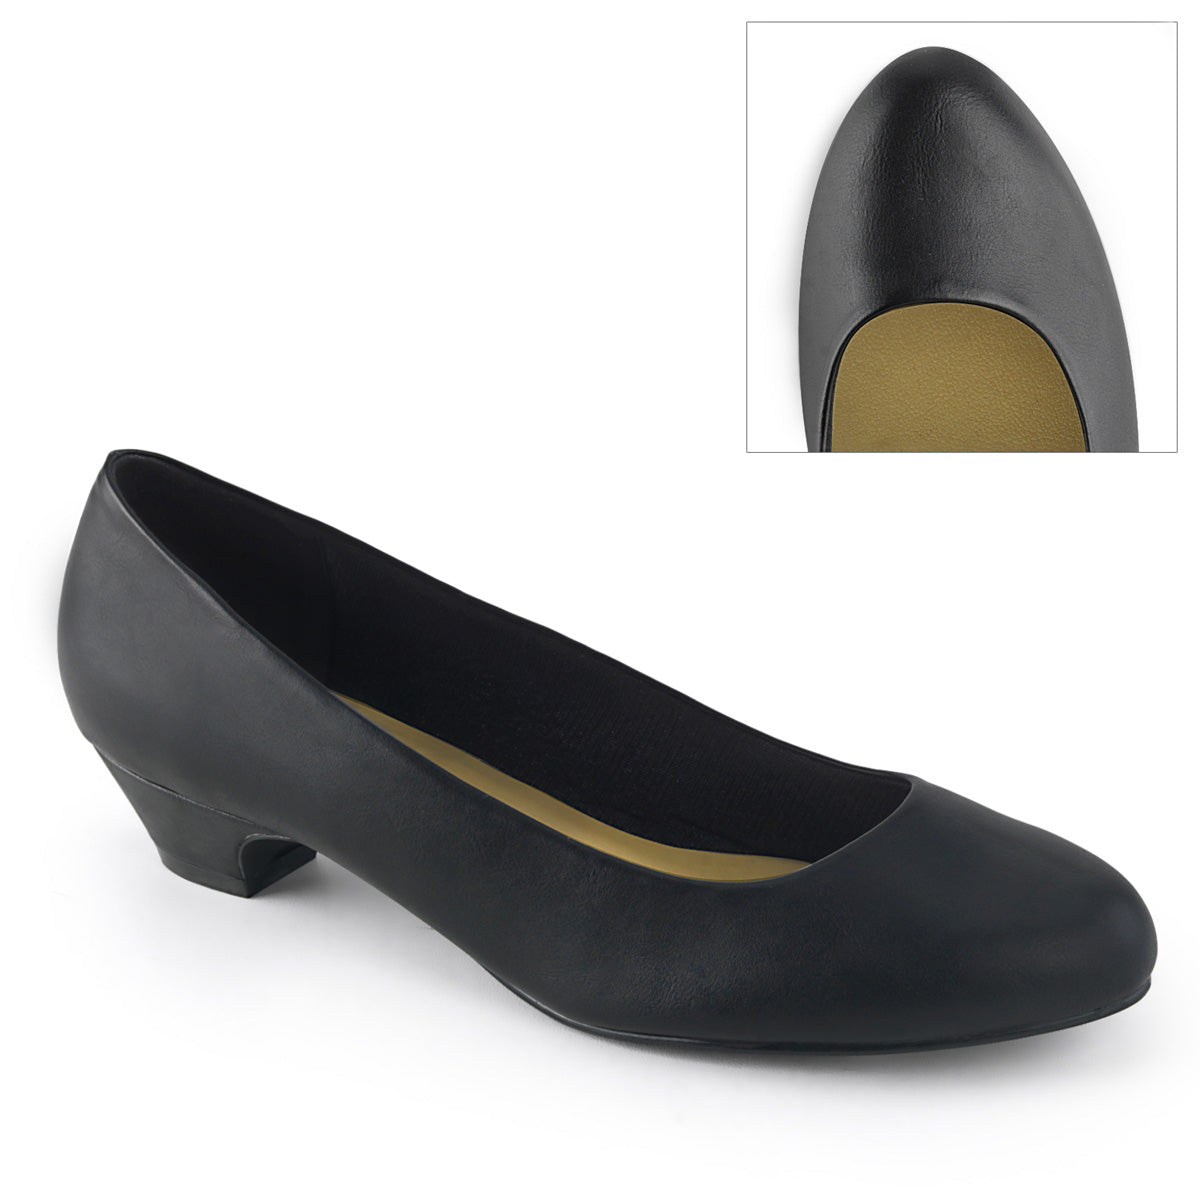 GWEN-01 Pleaser Large Size Ladies Shoes 1.5 Inch Heel Black Fetish Shoes